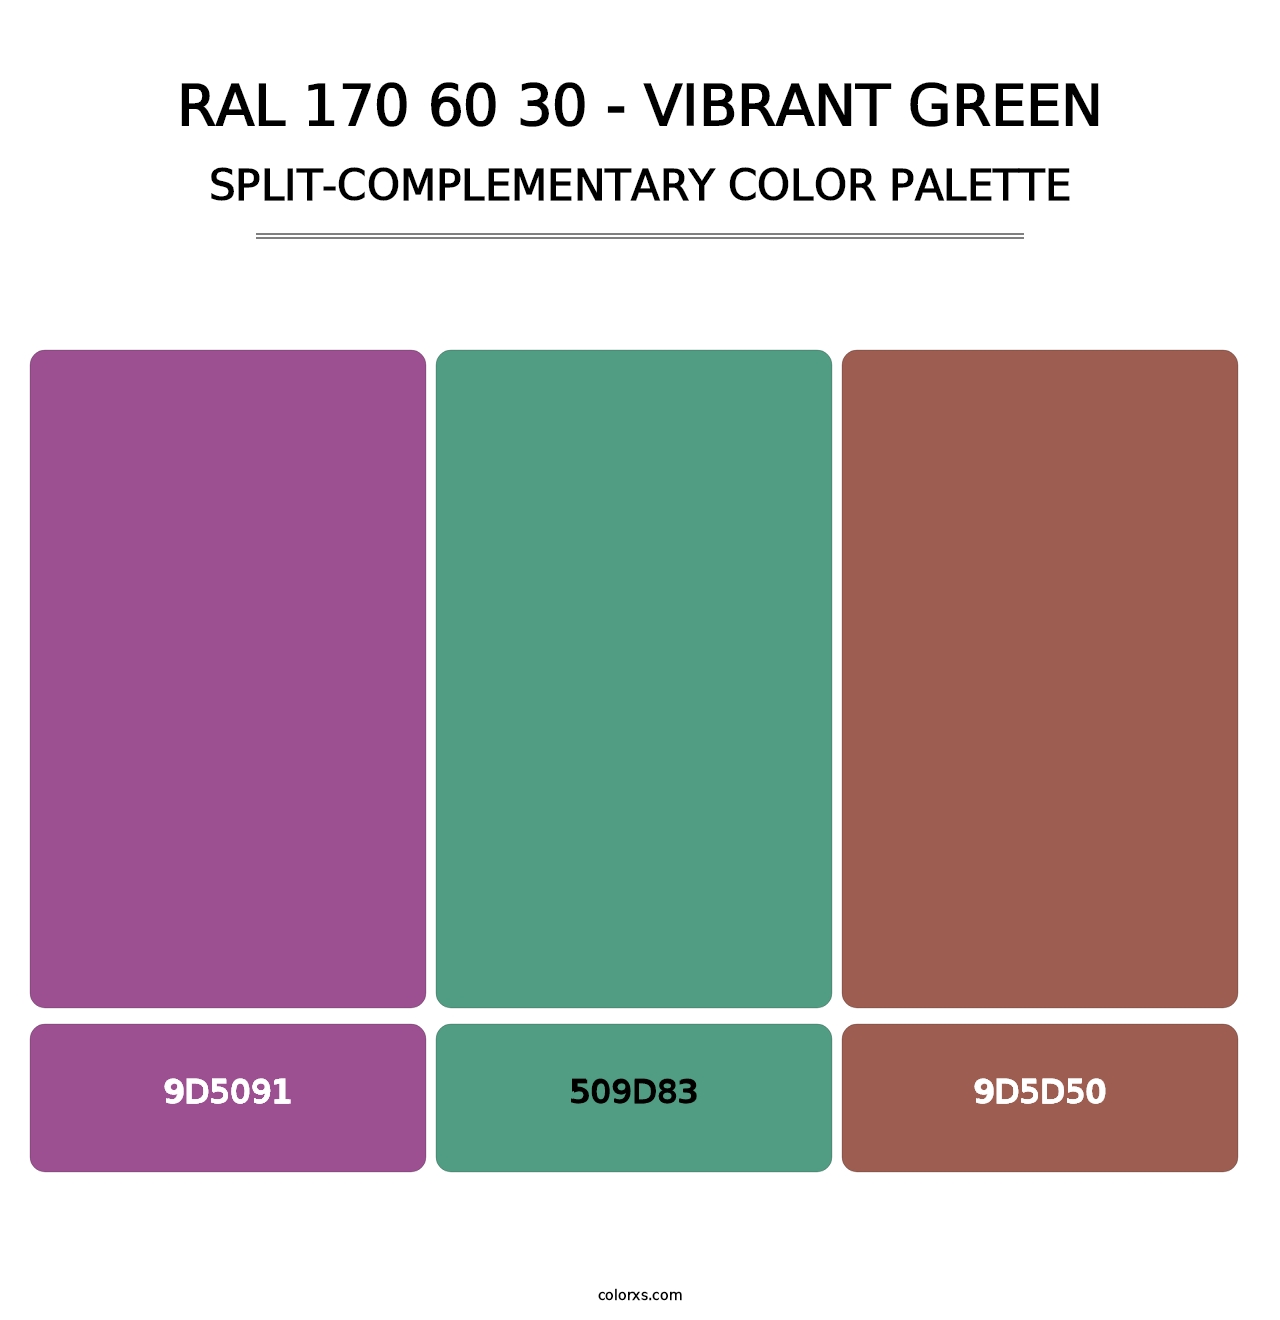 RAL 170 60 30 - Vibrant Green - Split-Complementary Color Palette